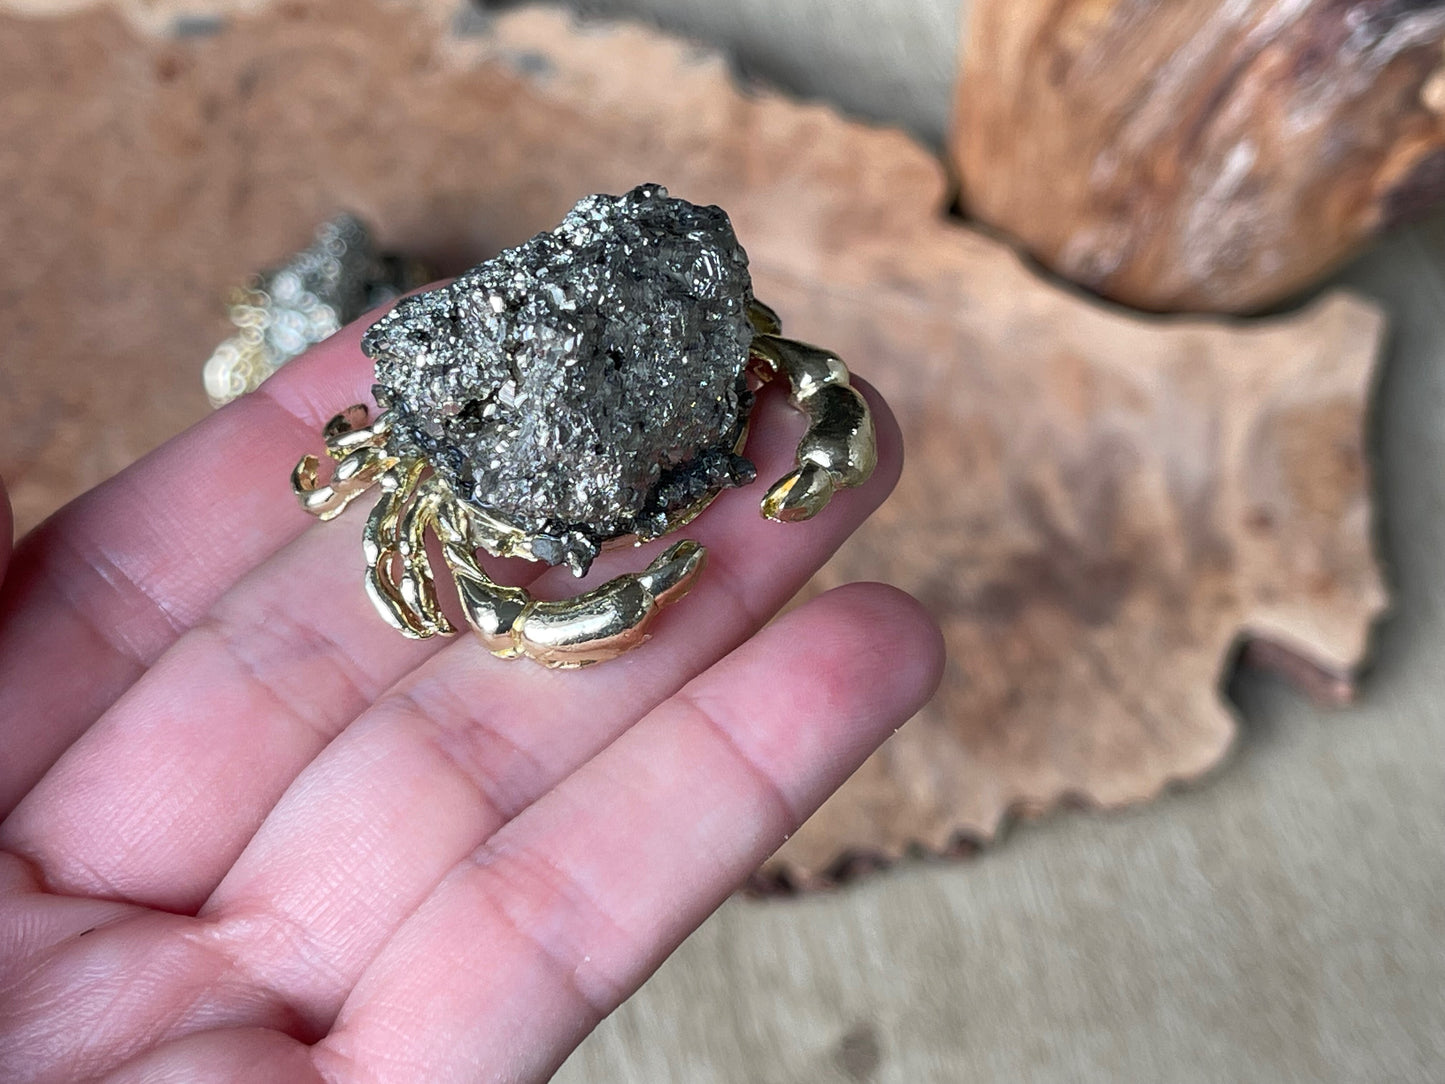 Pyrite crabs